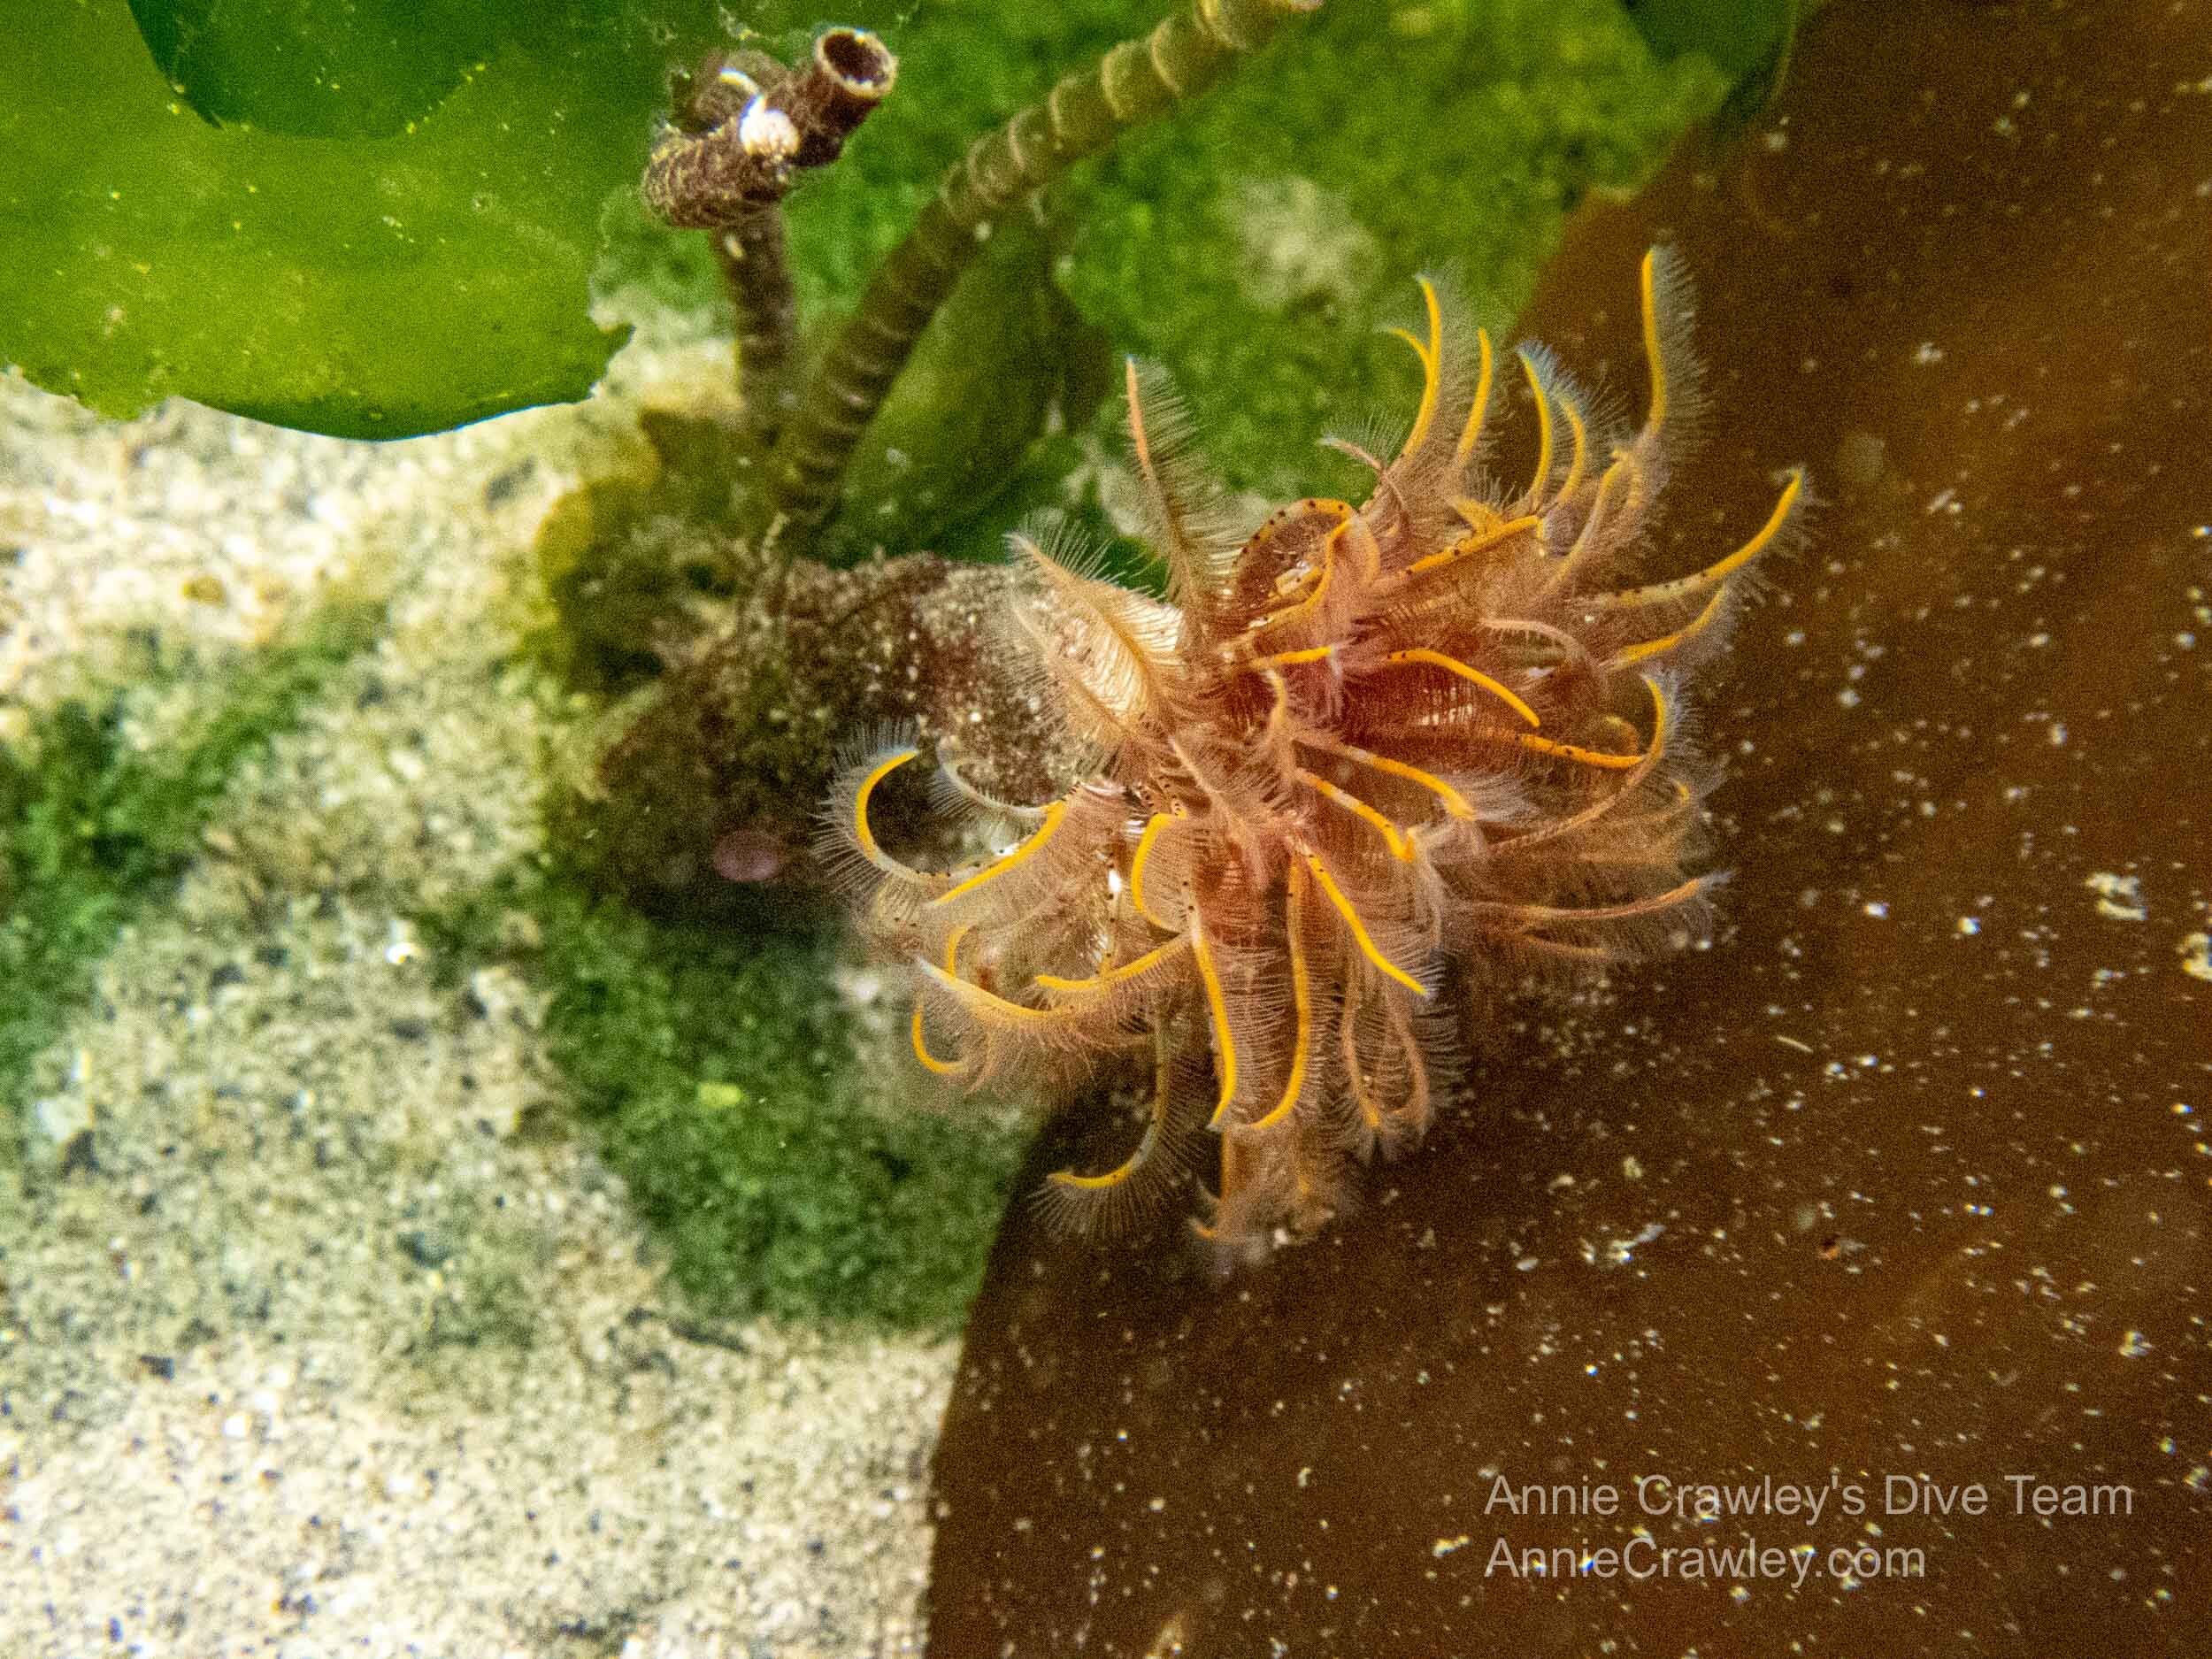 WoRMS - World Register of Marine Species - Dumontia simplex Cotton